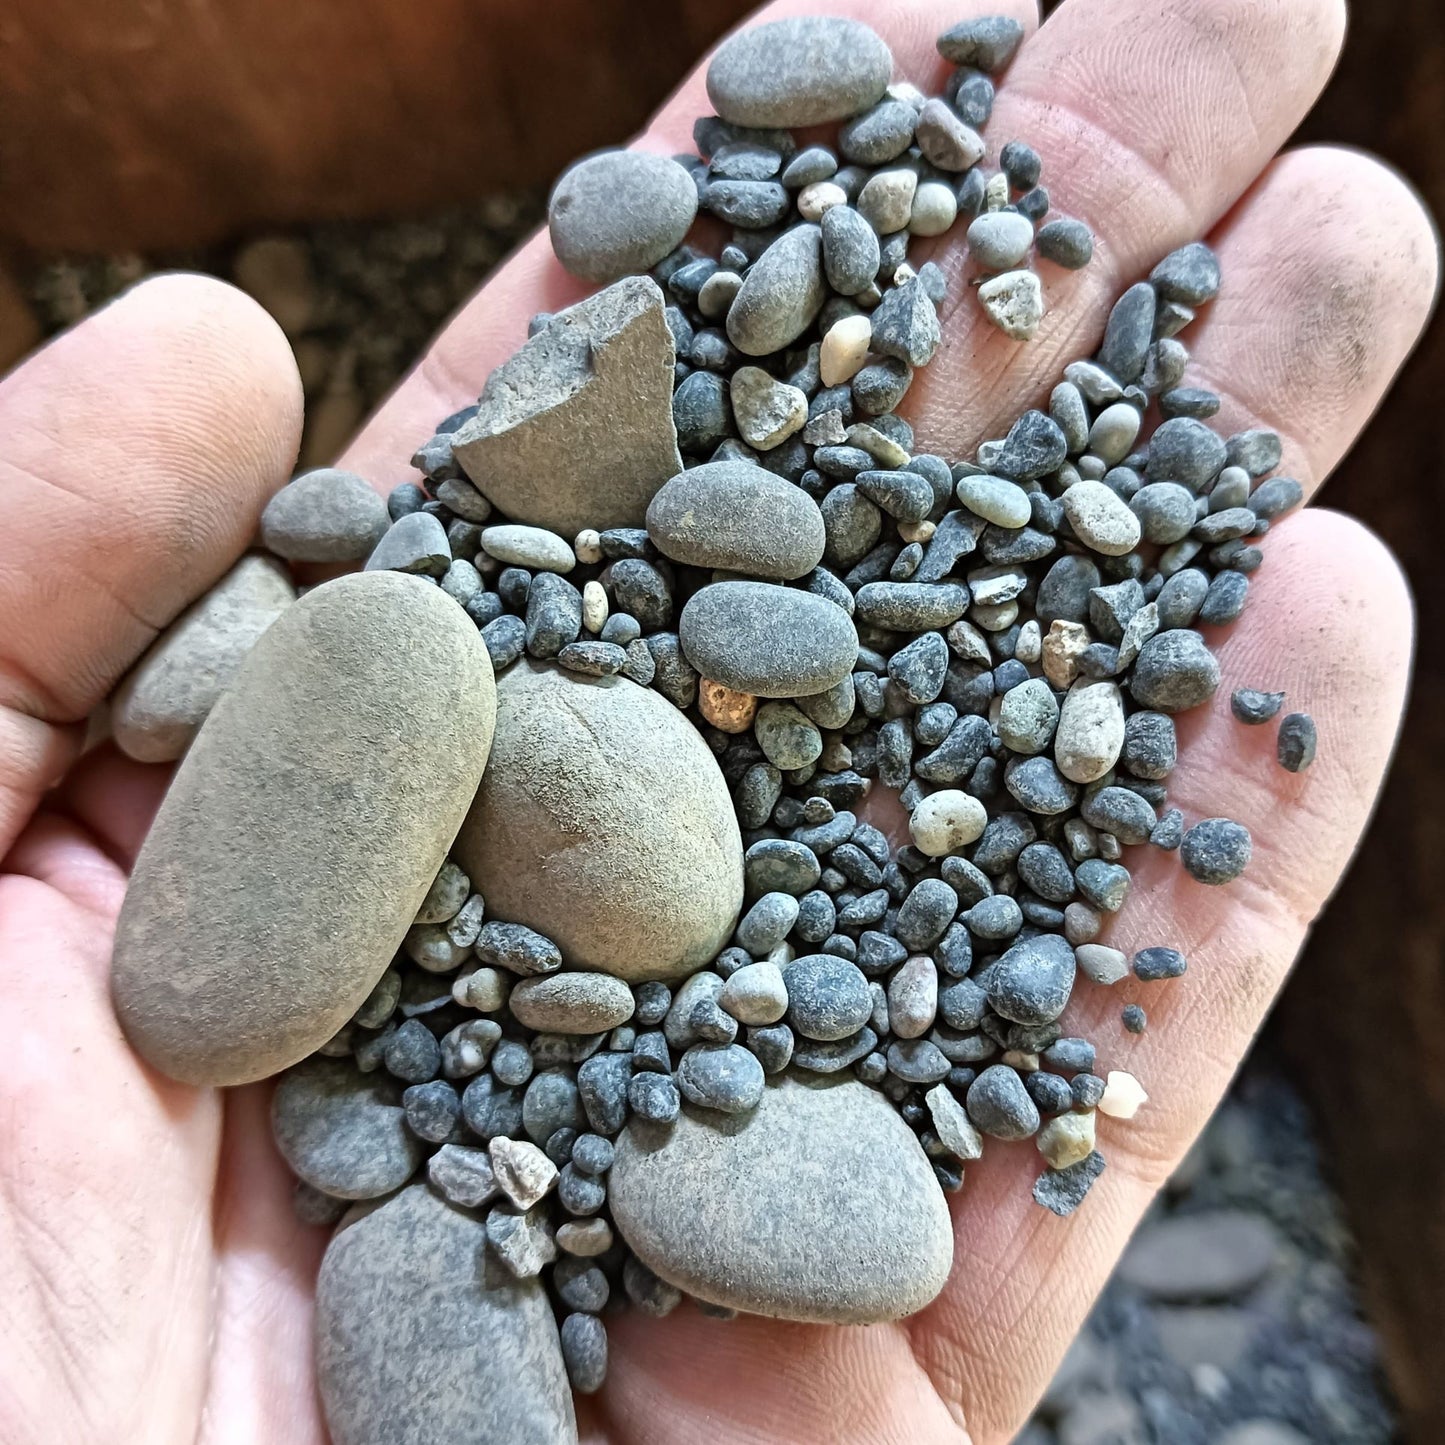 River Black Natural Gravel - Rock per kilo 